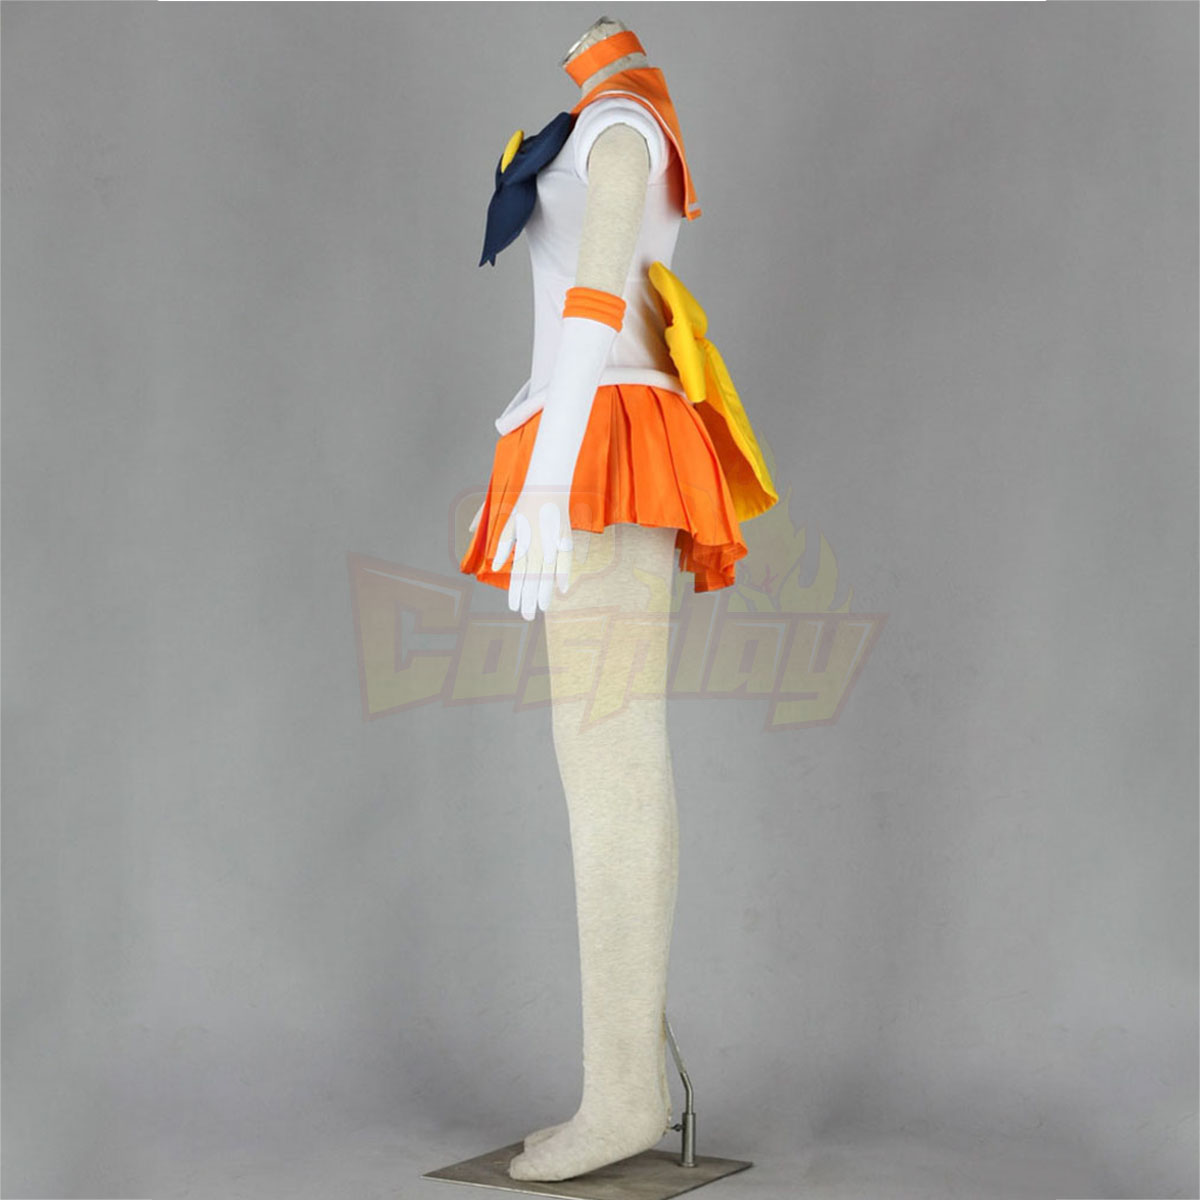 Sailor Moon Minako Aino 1ST Cosplay Costumes Deluxe Edition